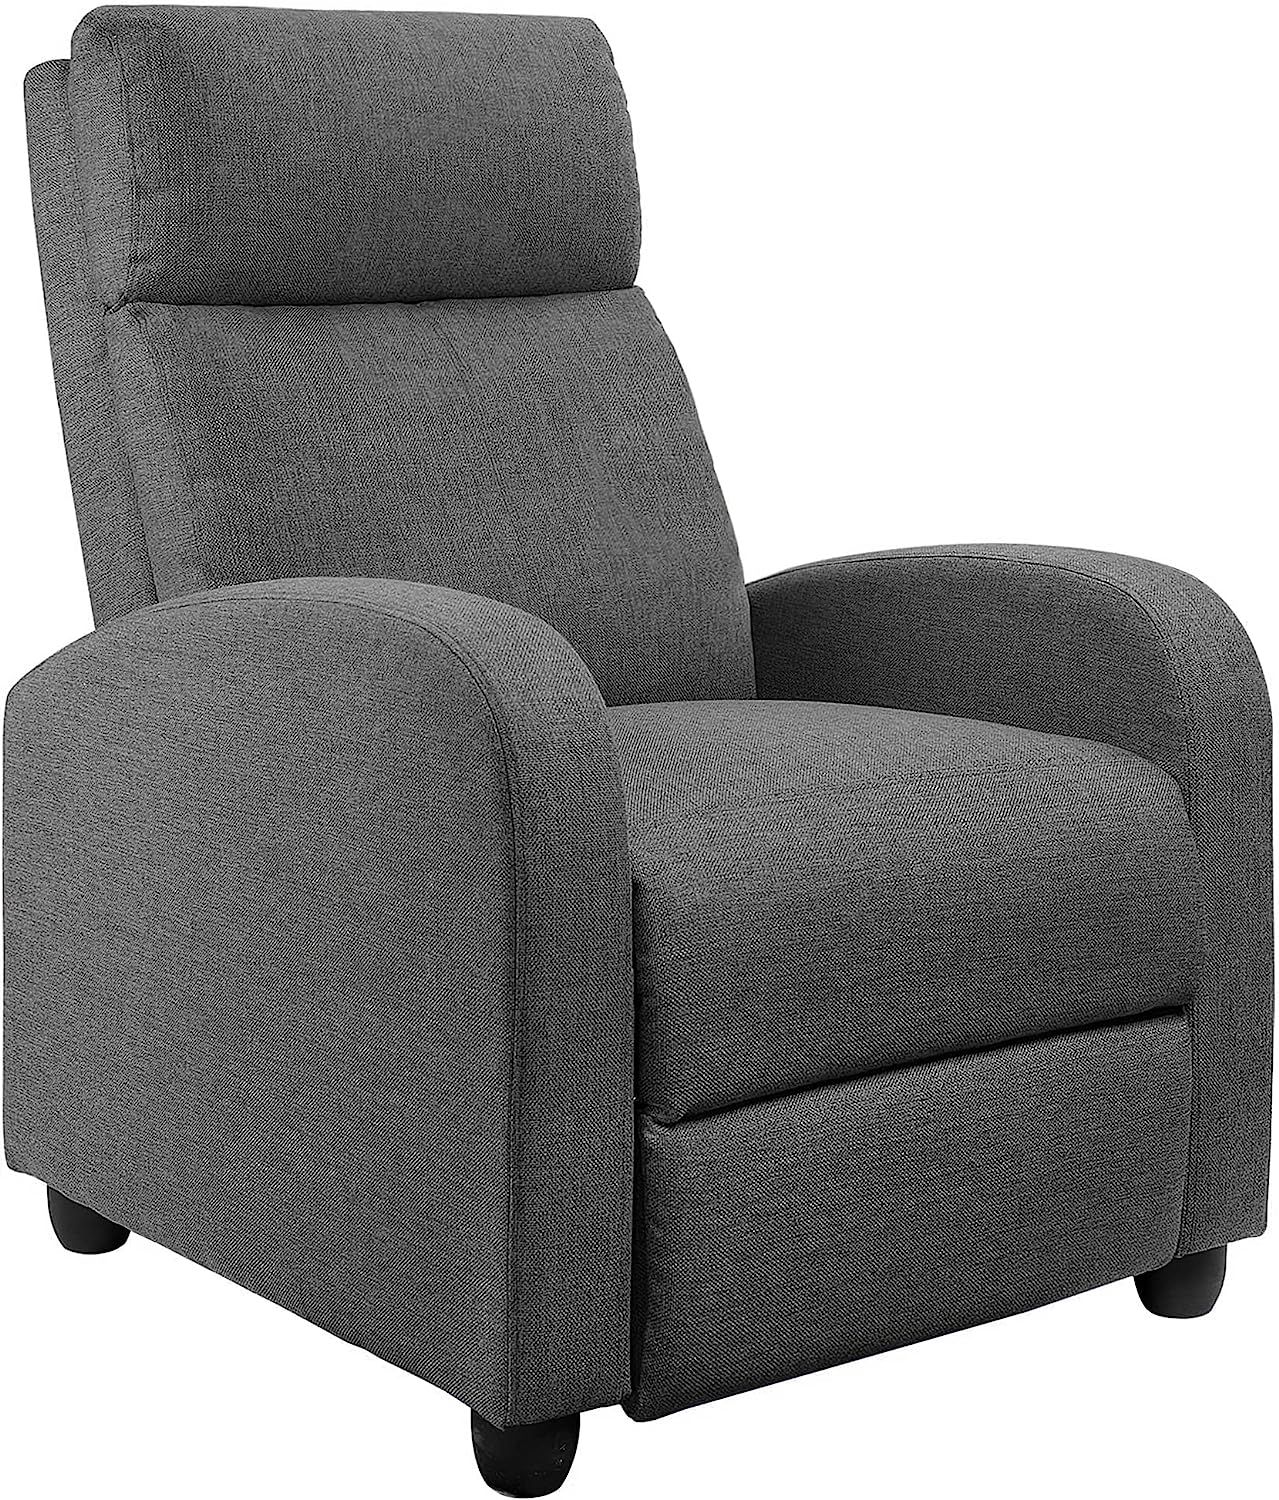 JUMMICO Recliner Chair Adjustable Home Theater Single [...]